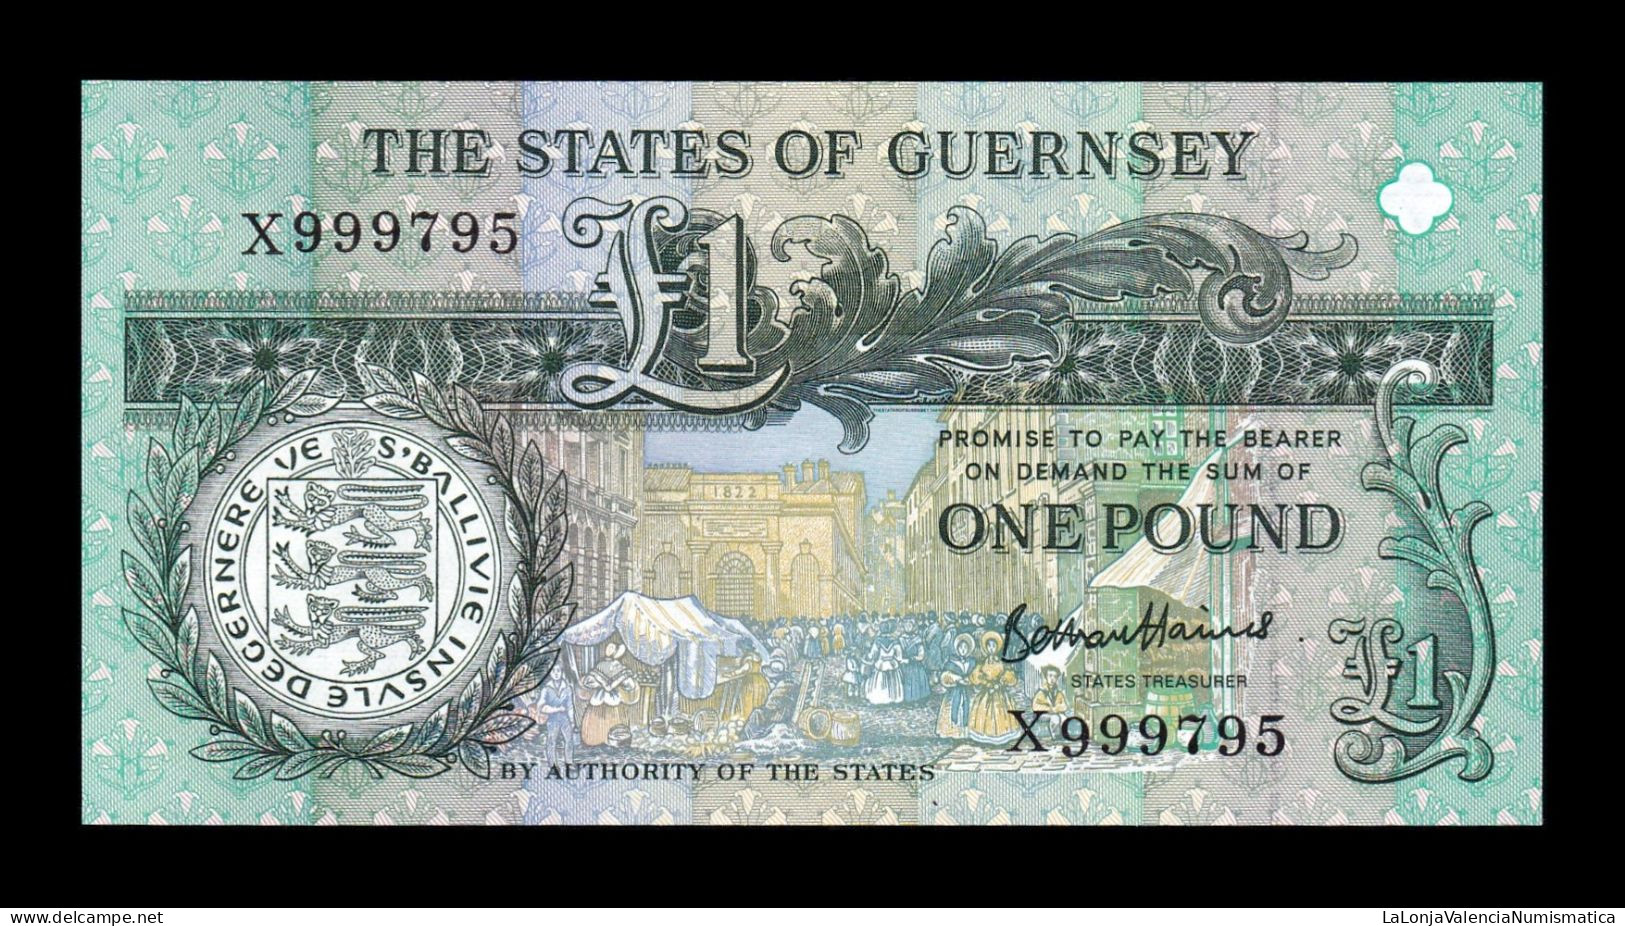 Guernsey 1 Pound (1991-2016) Pick 52d Sc Unc - Guernesey